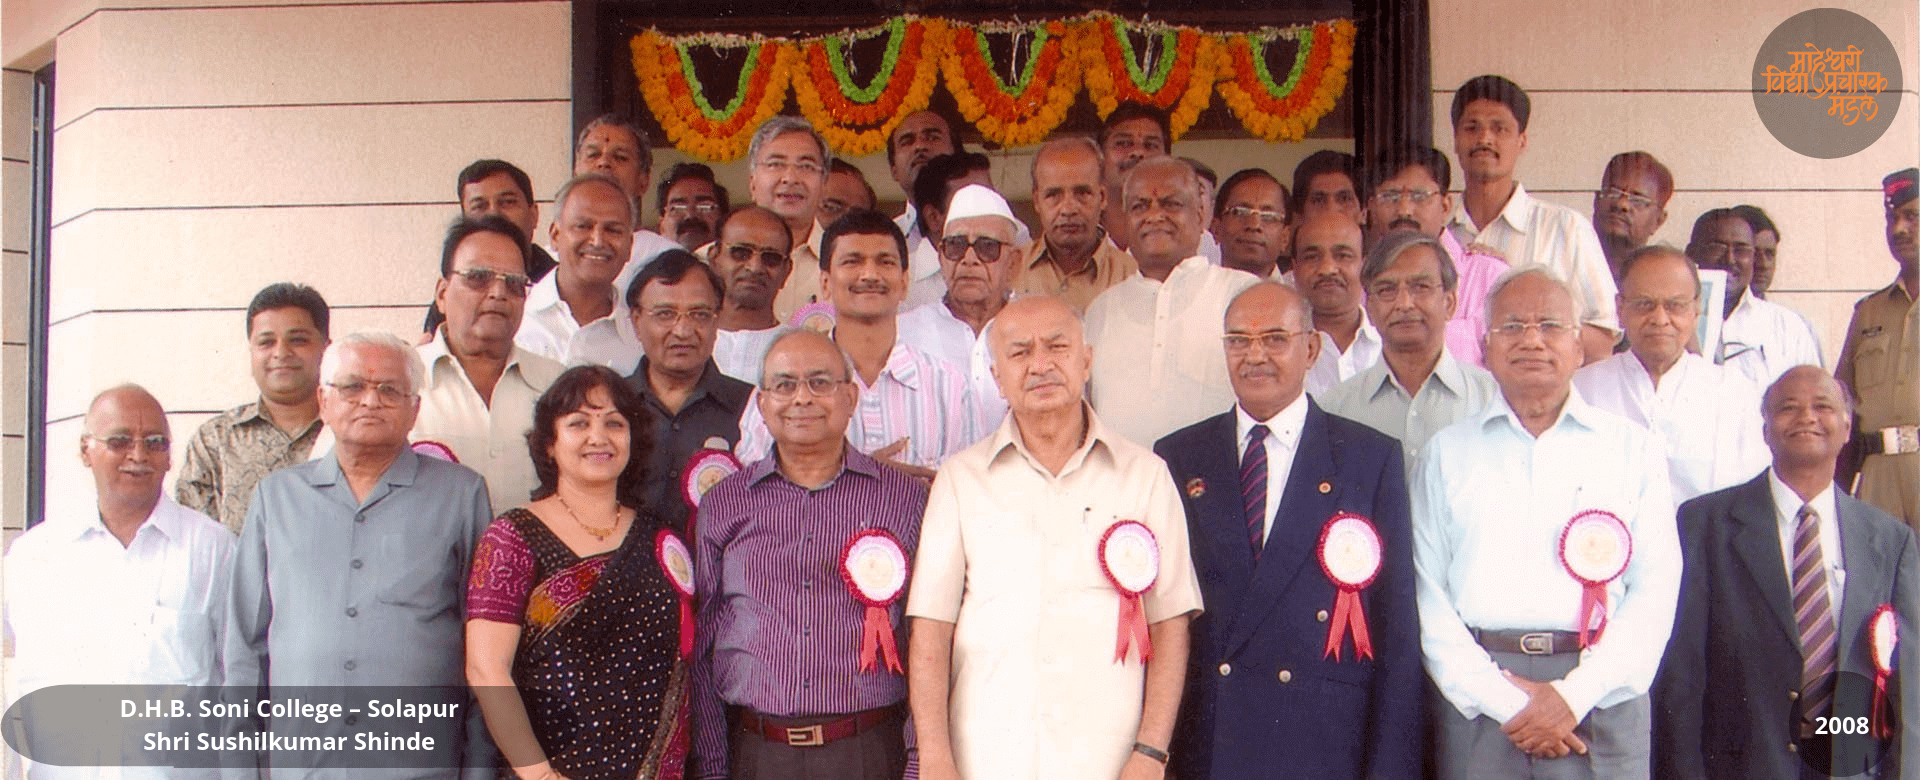 5.	D.H.B. Soni College – Solapur Shri Sushilkumar Shinde   2008